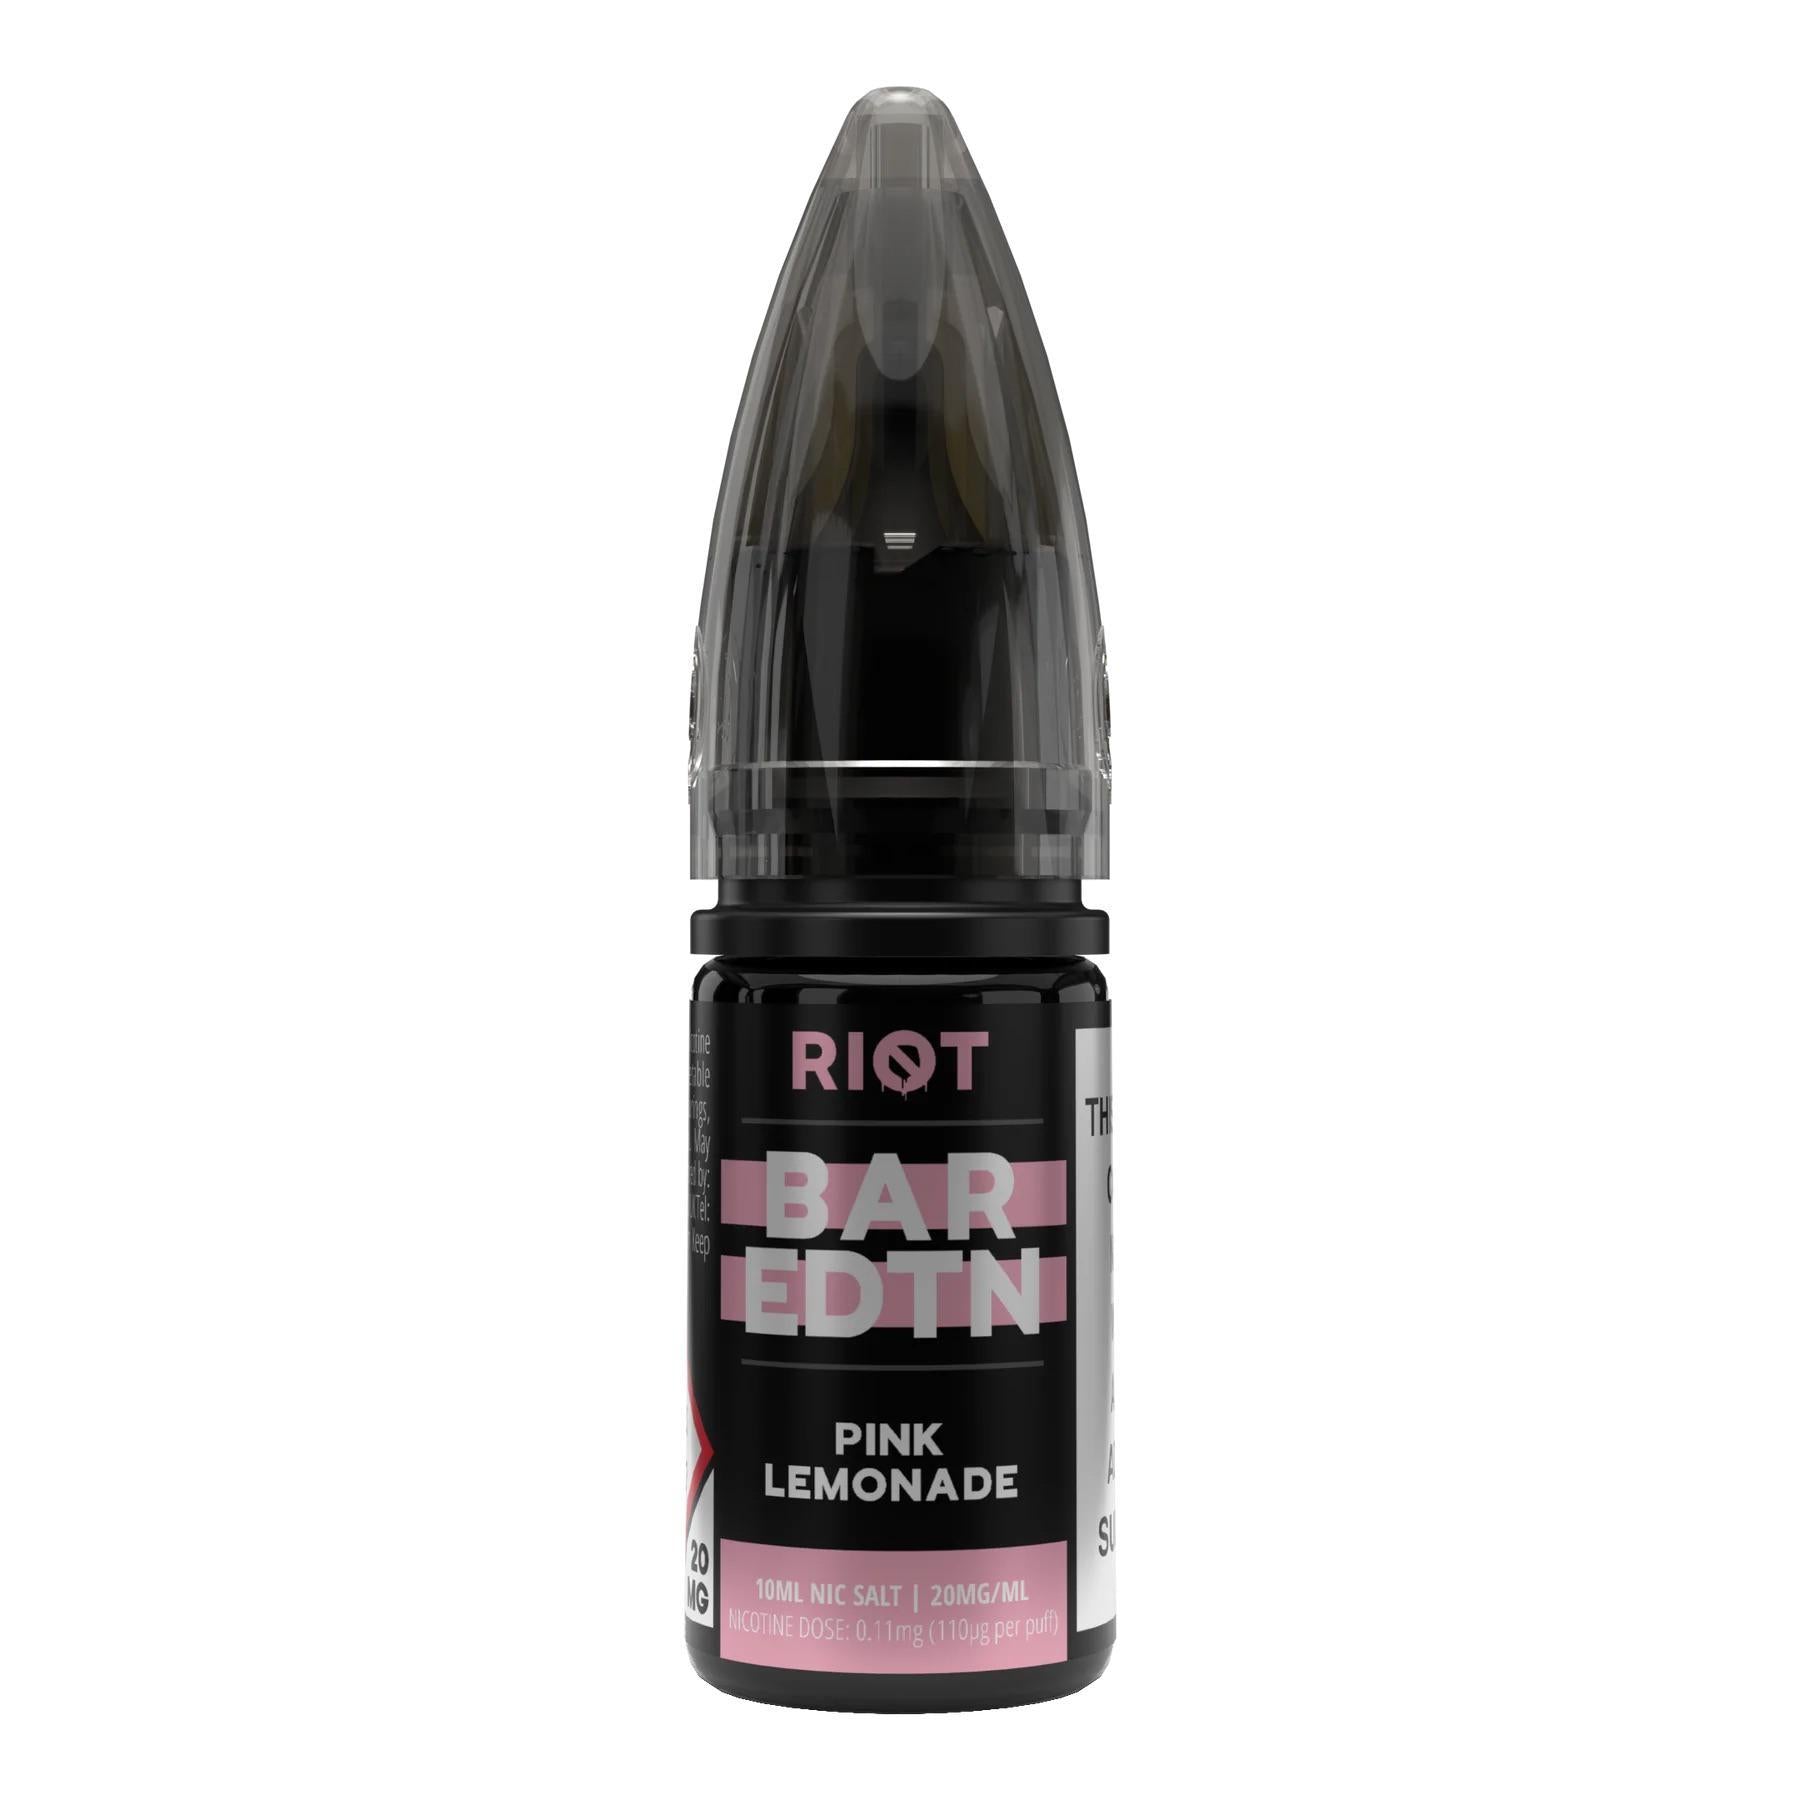 RIOT Bar EDTN - Pink Lemonade 10ml E-Liquid - The British Vape Company